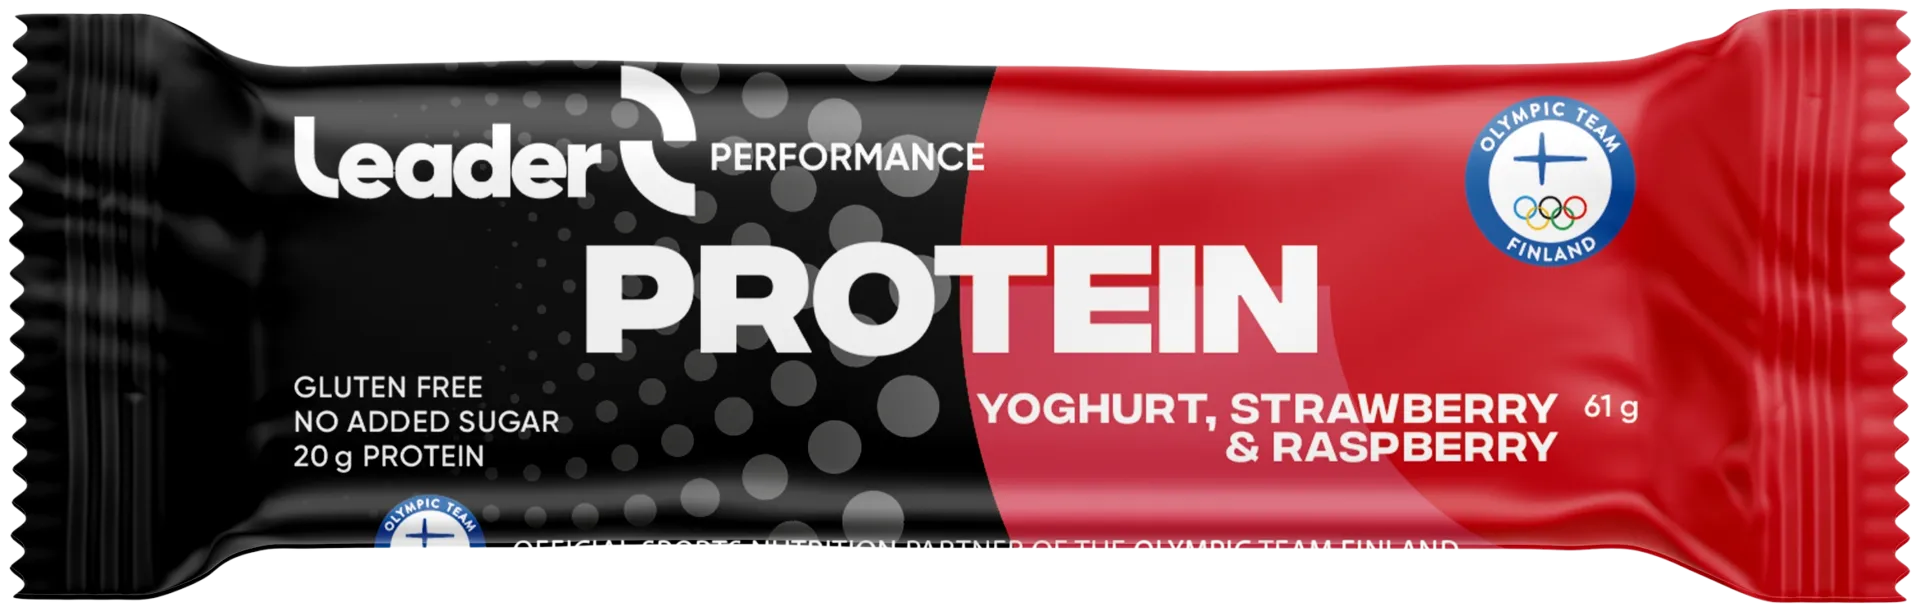 Leader Performance Protein Yoghurt, Strawberry & Raspberry jogurtti-mansikka-vadelma proteiinipatukka 61 g